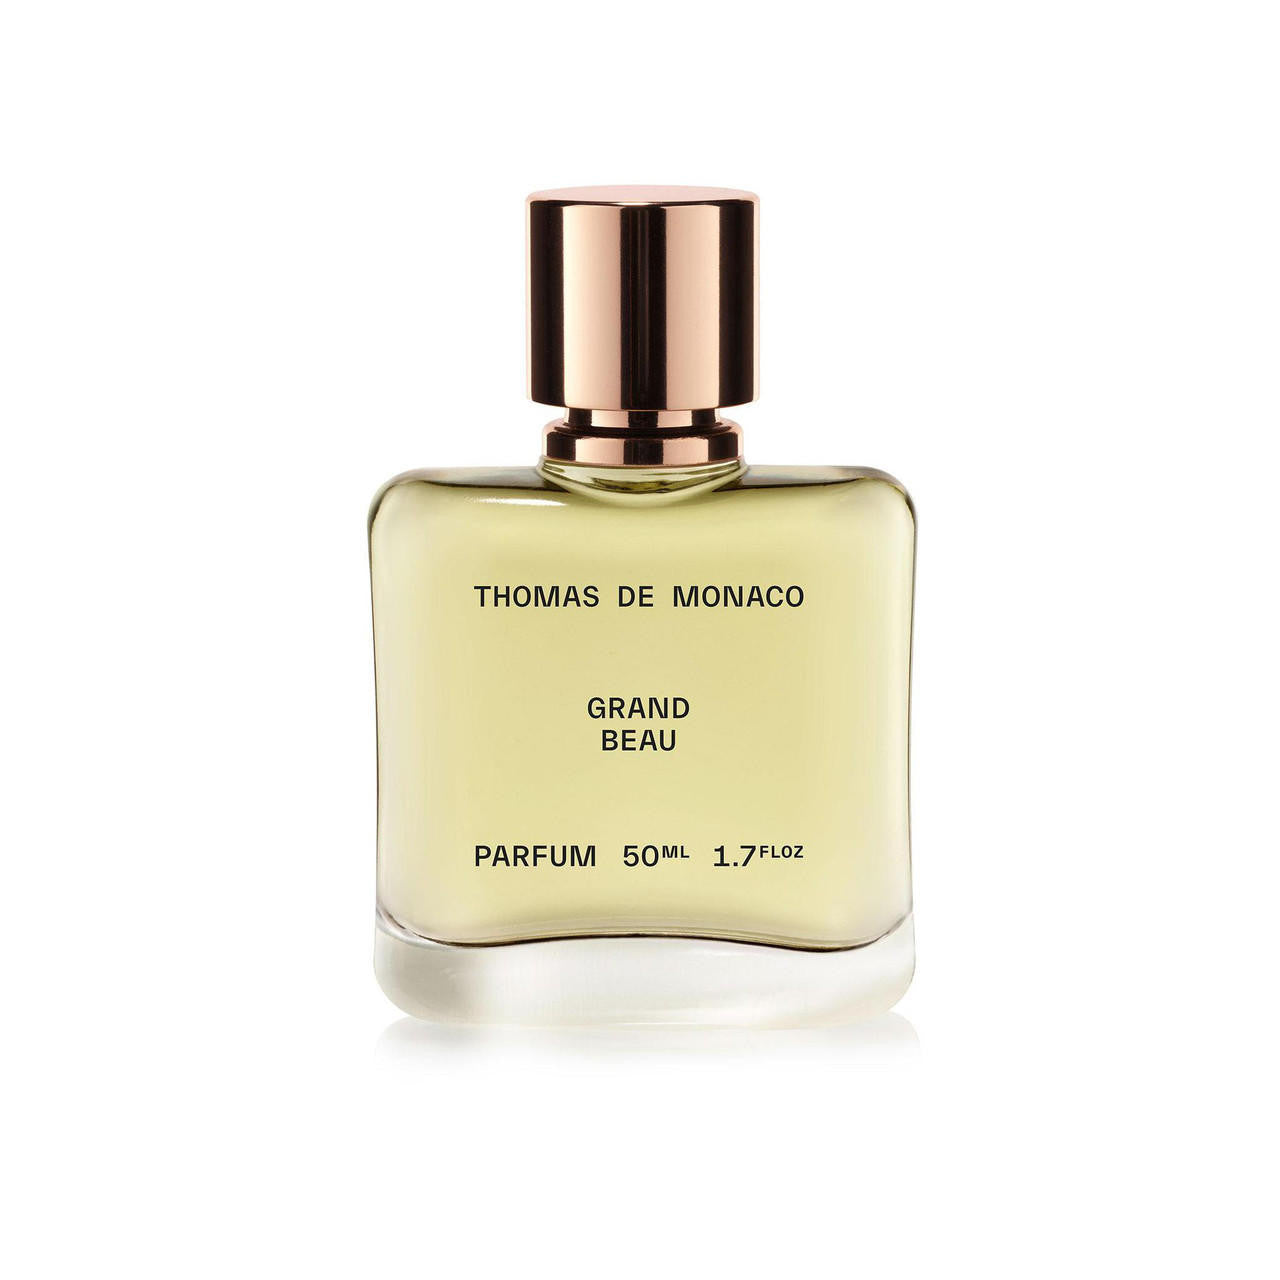  Thomas De Monaco Grand Beau Eau de Parfum 